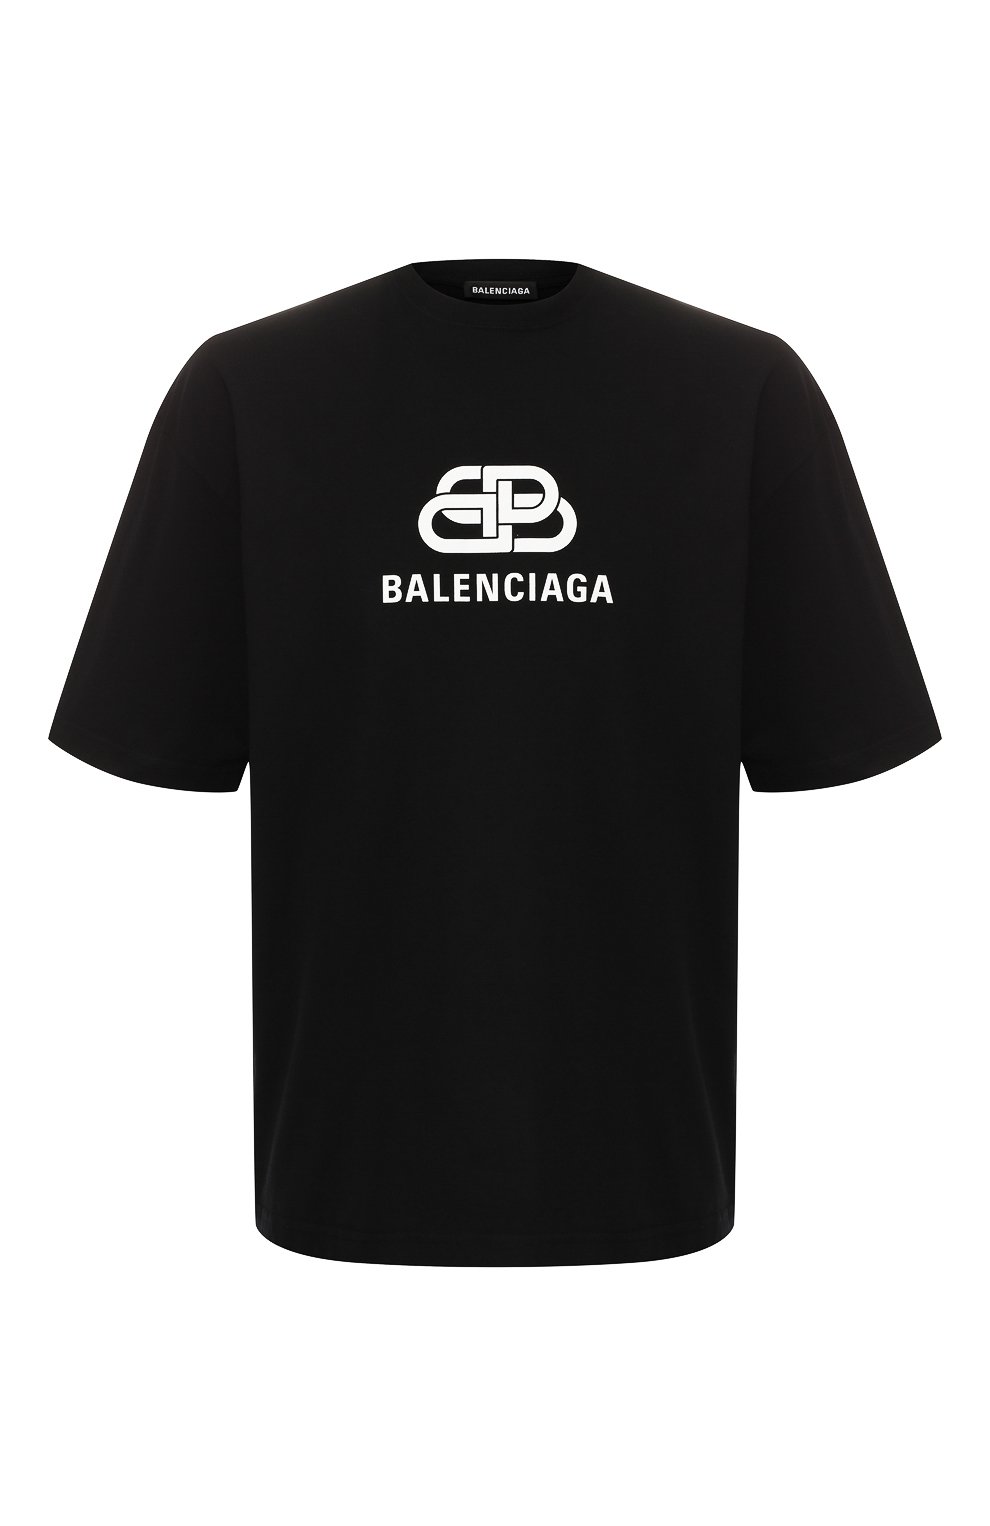 ЦУМ Баленсиага футболка мужская